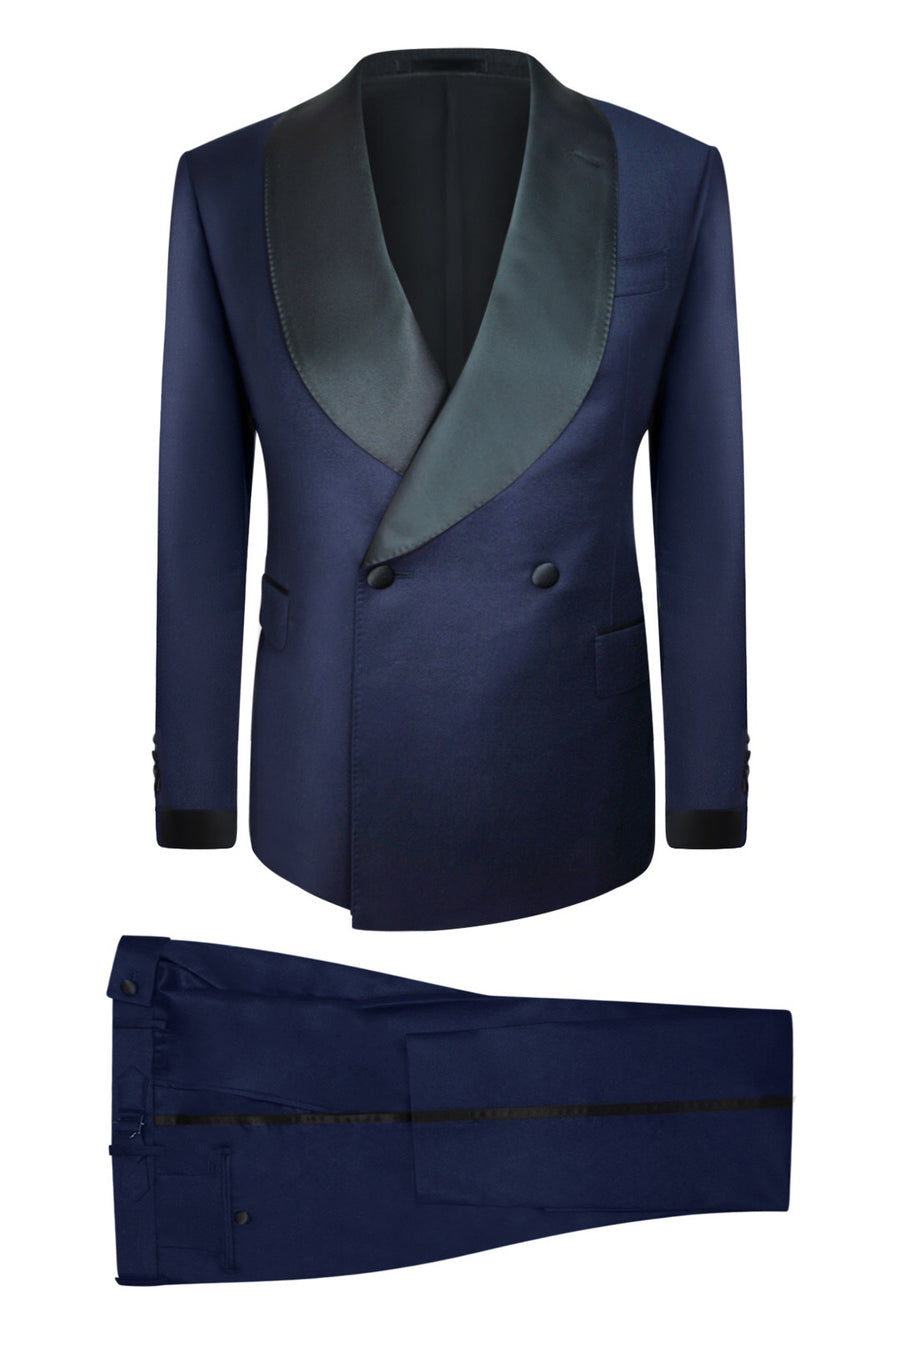 Navy Blue Slim Fit Tuxedo Jacket (Satin Lapel)